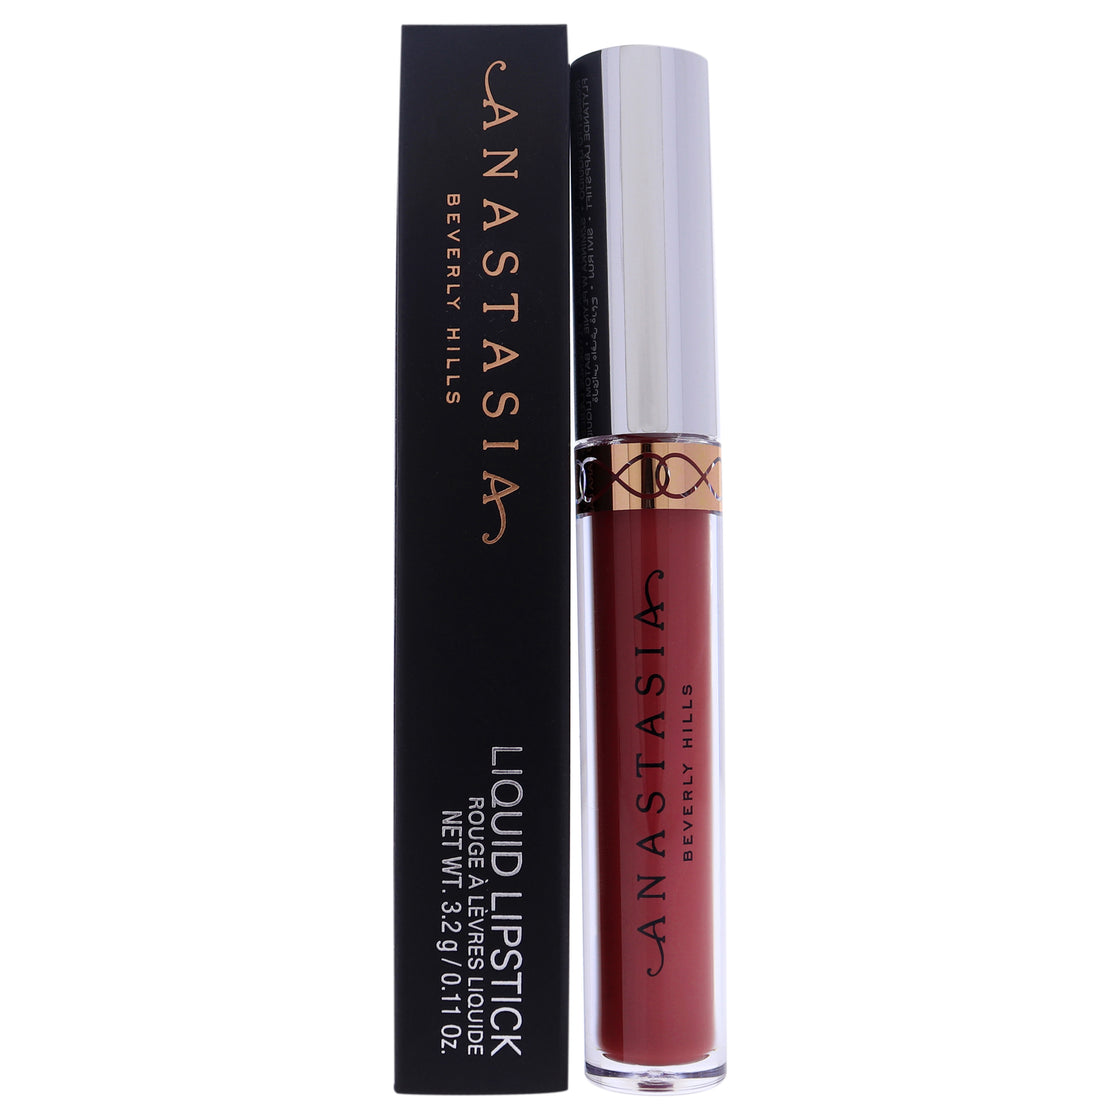 Liquid Lipstick - Dazed by Anastasia Beverly Hills for Women - 0.11 oz Lipstick